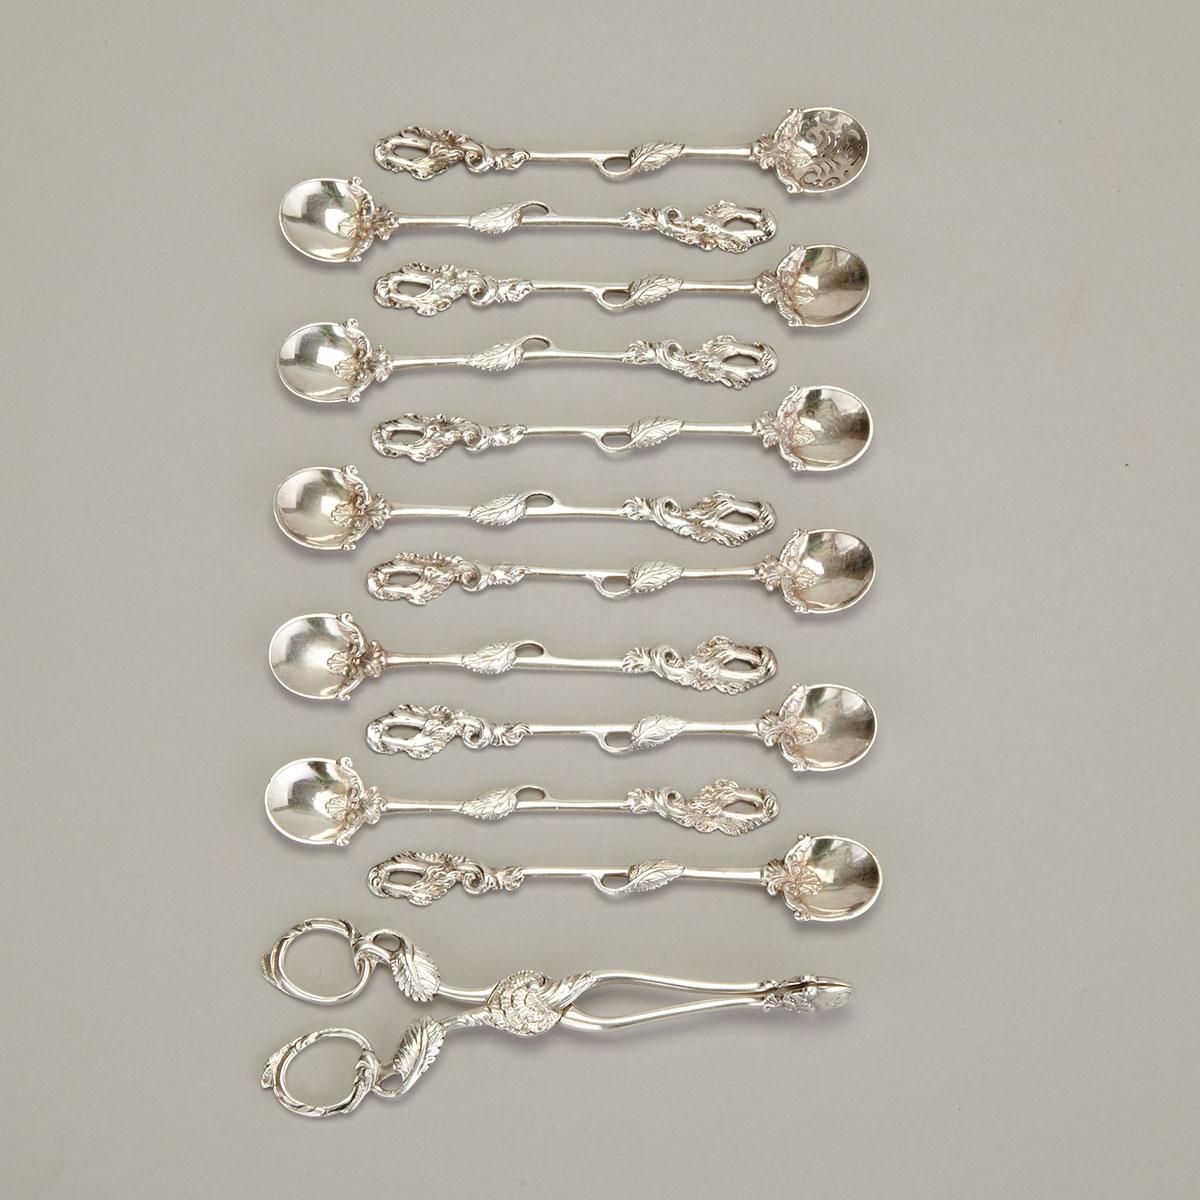 Ten Mid-Georgian Naturalistic Style Silver Teaspoons, Mote Spoon and Sugar Tongs, mid-18th century